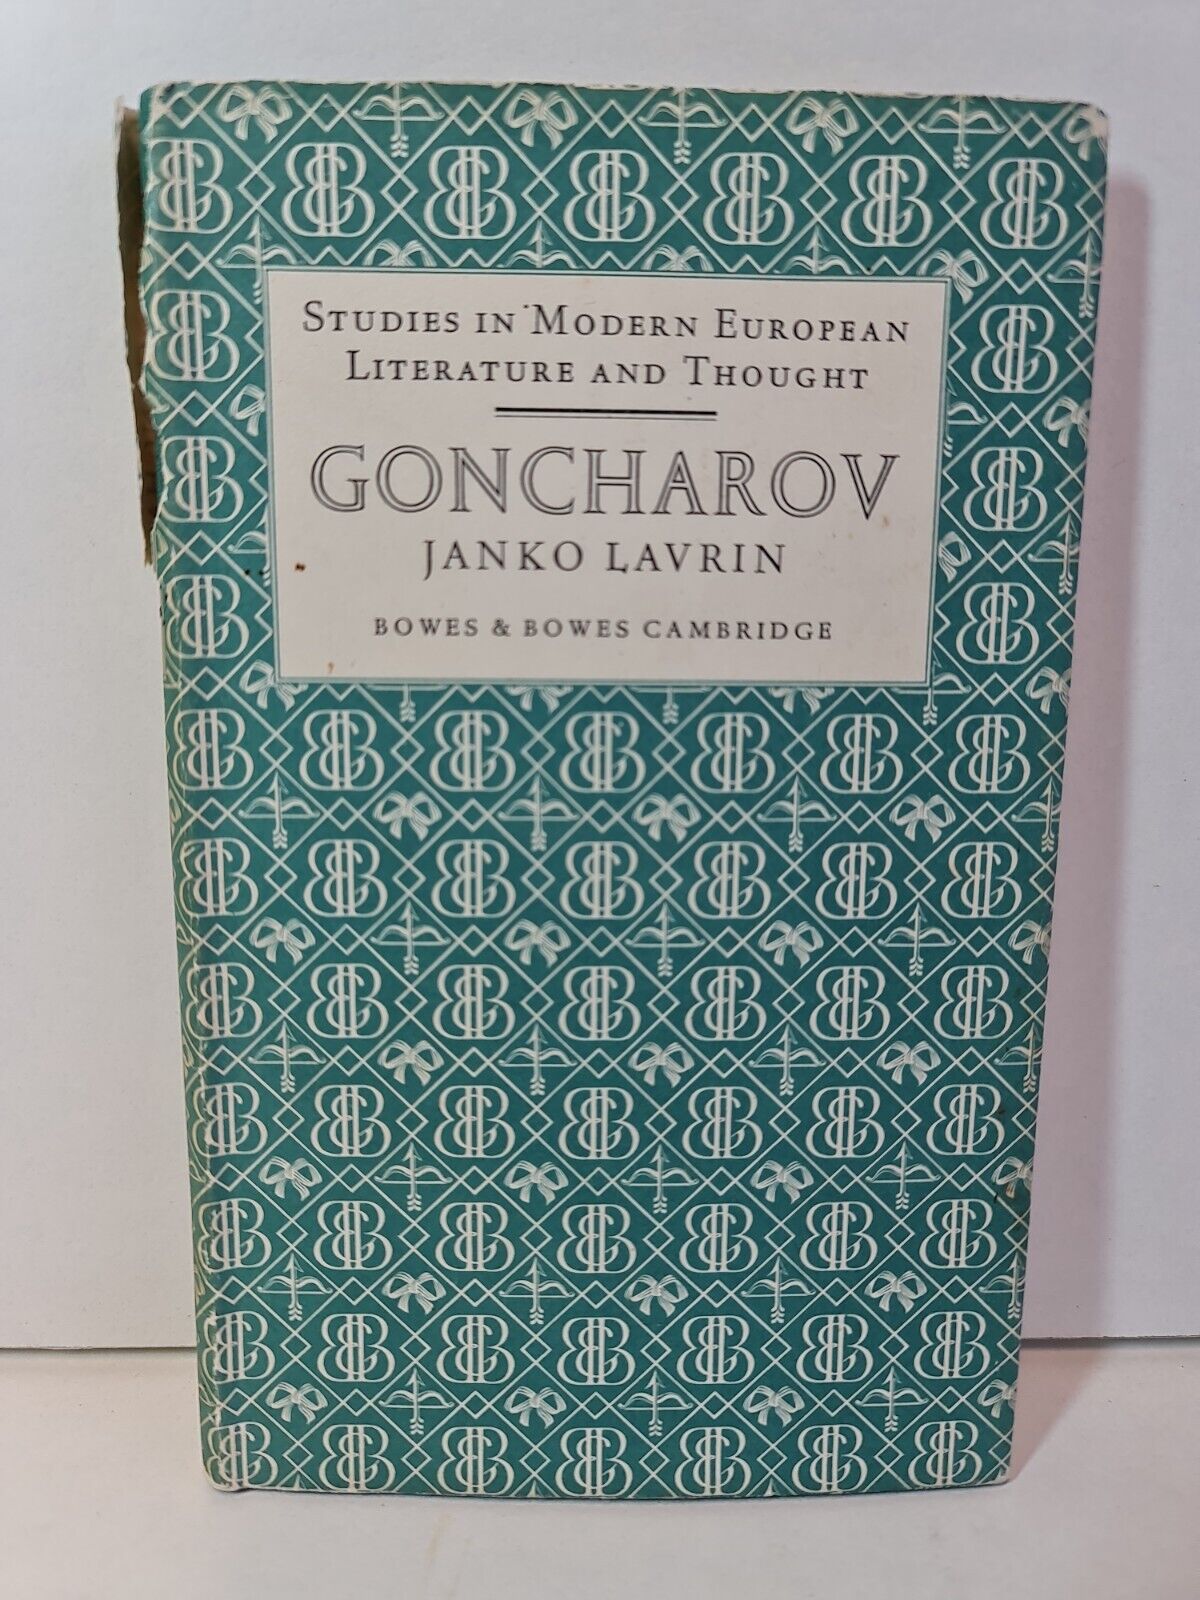 Goncharov by Janko Lavrin (1954)